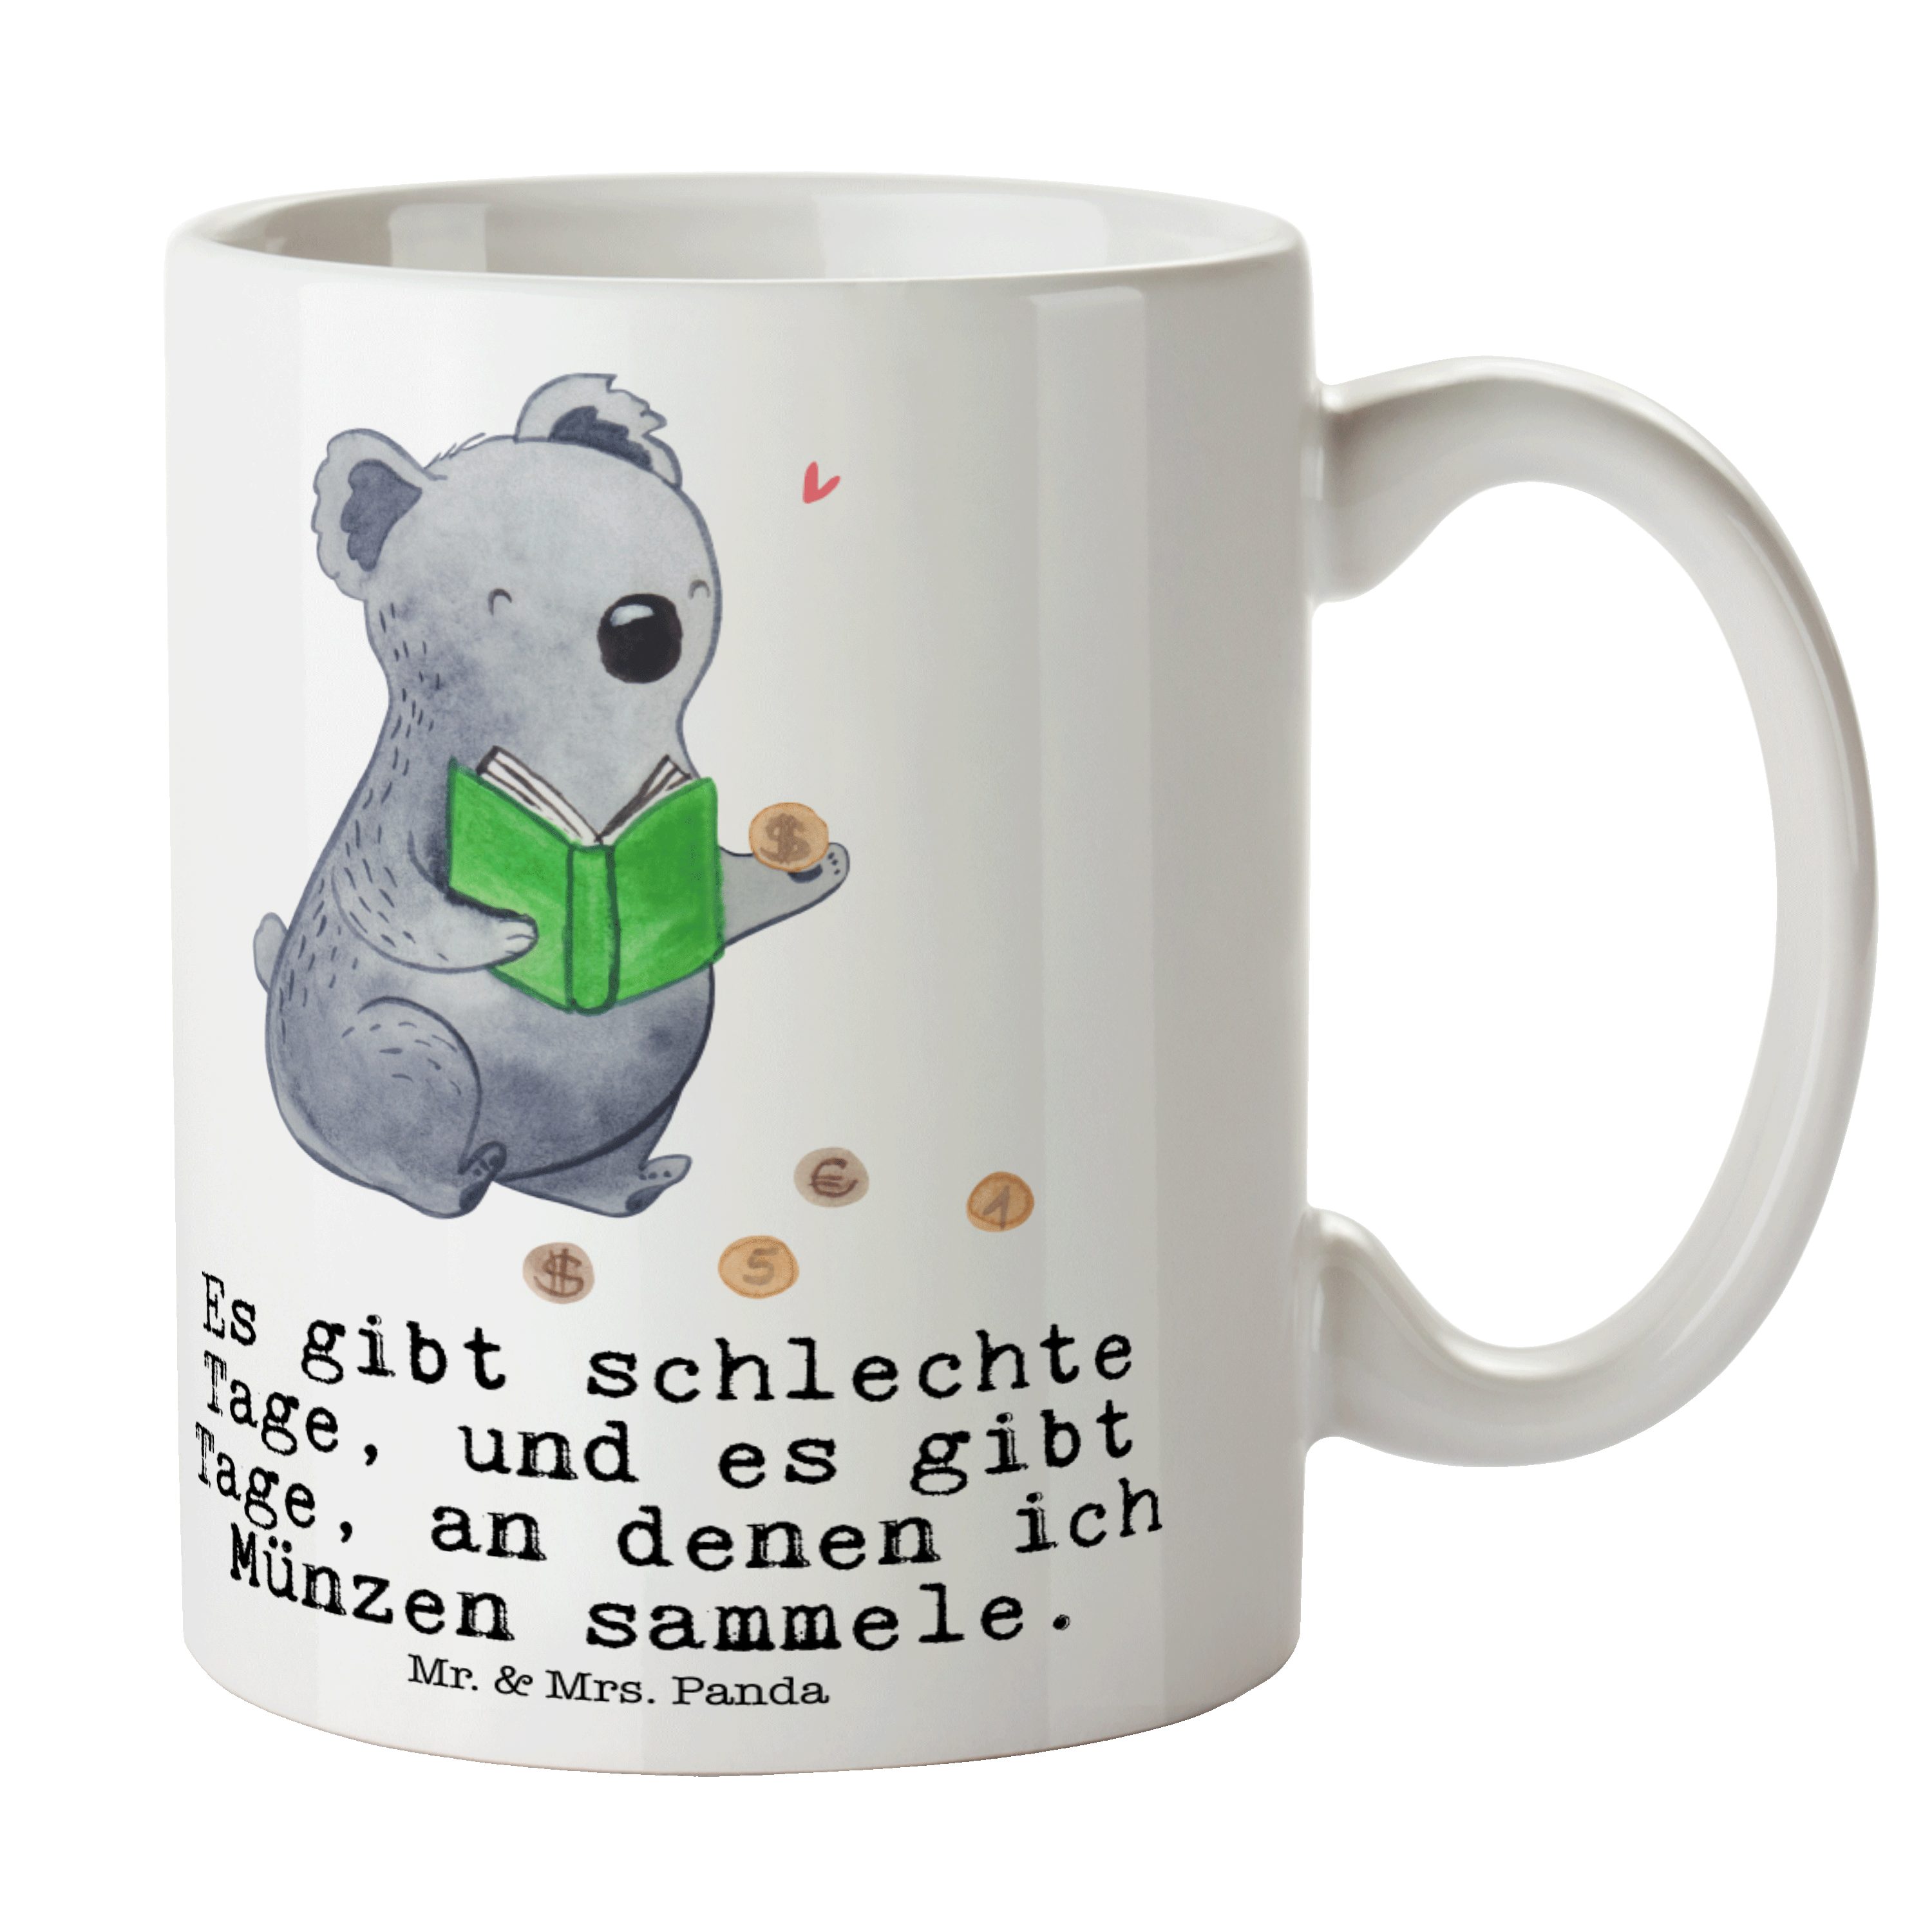 Mr. & Mrs. Panda Tasse Koala Münzen sammeln Tage - Weiß - Geschenk, Danke, Kaffeetasse, Kaff, Keramik